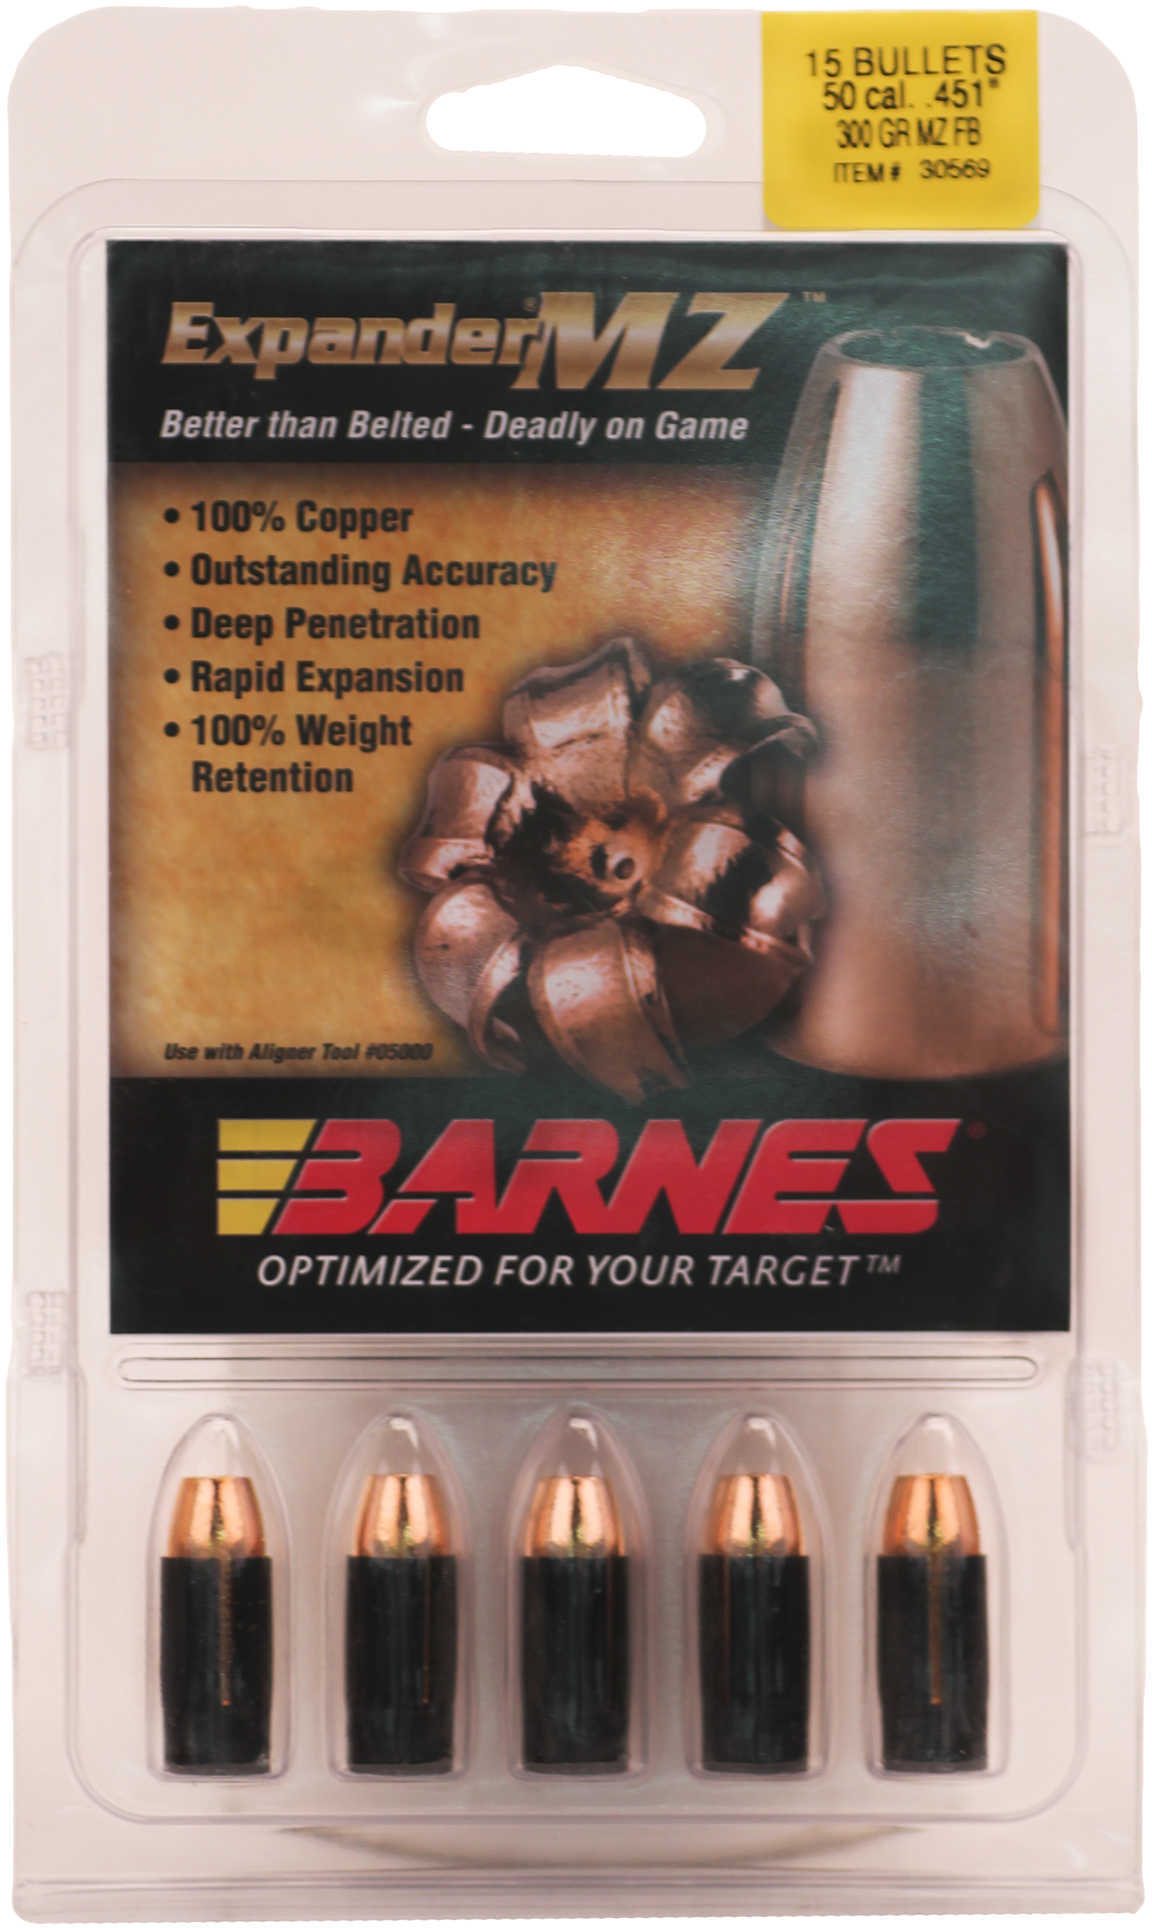 Barnes Muzzleloader Bullets 50 Cal. 300 gr. Expander MZ FB 15 rd. Model: 30569